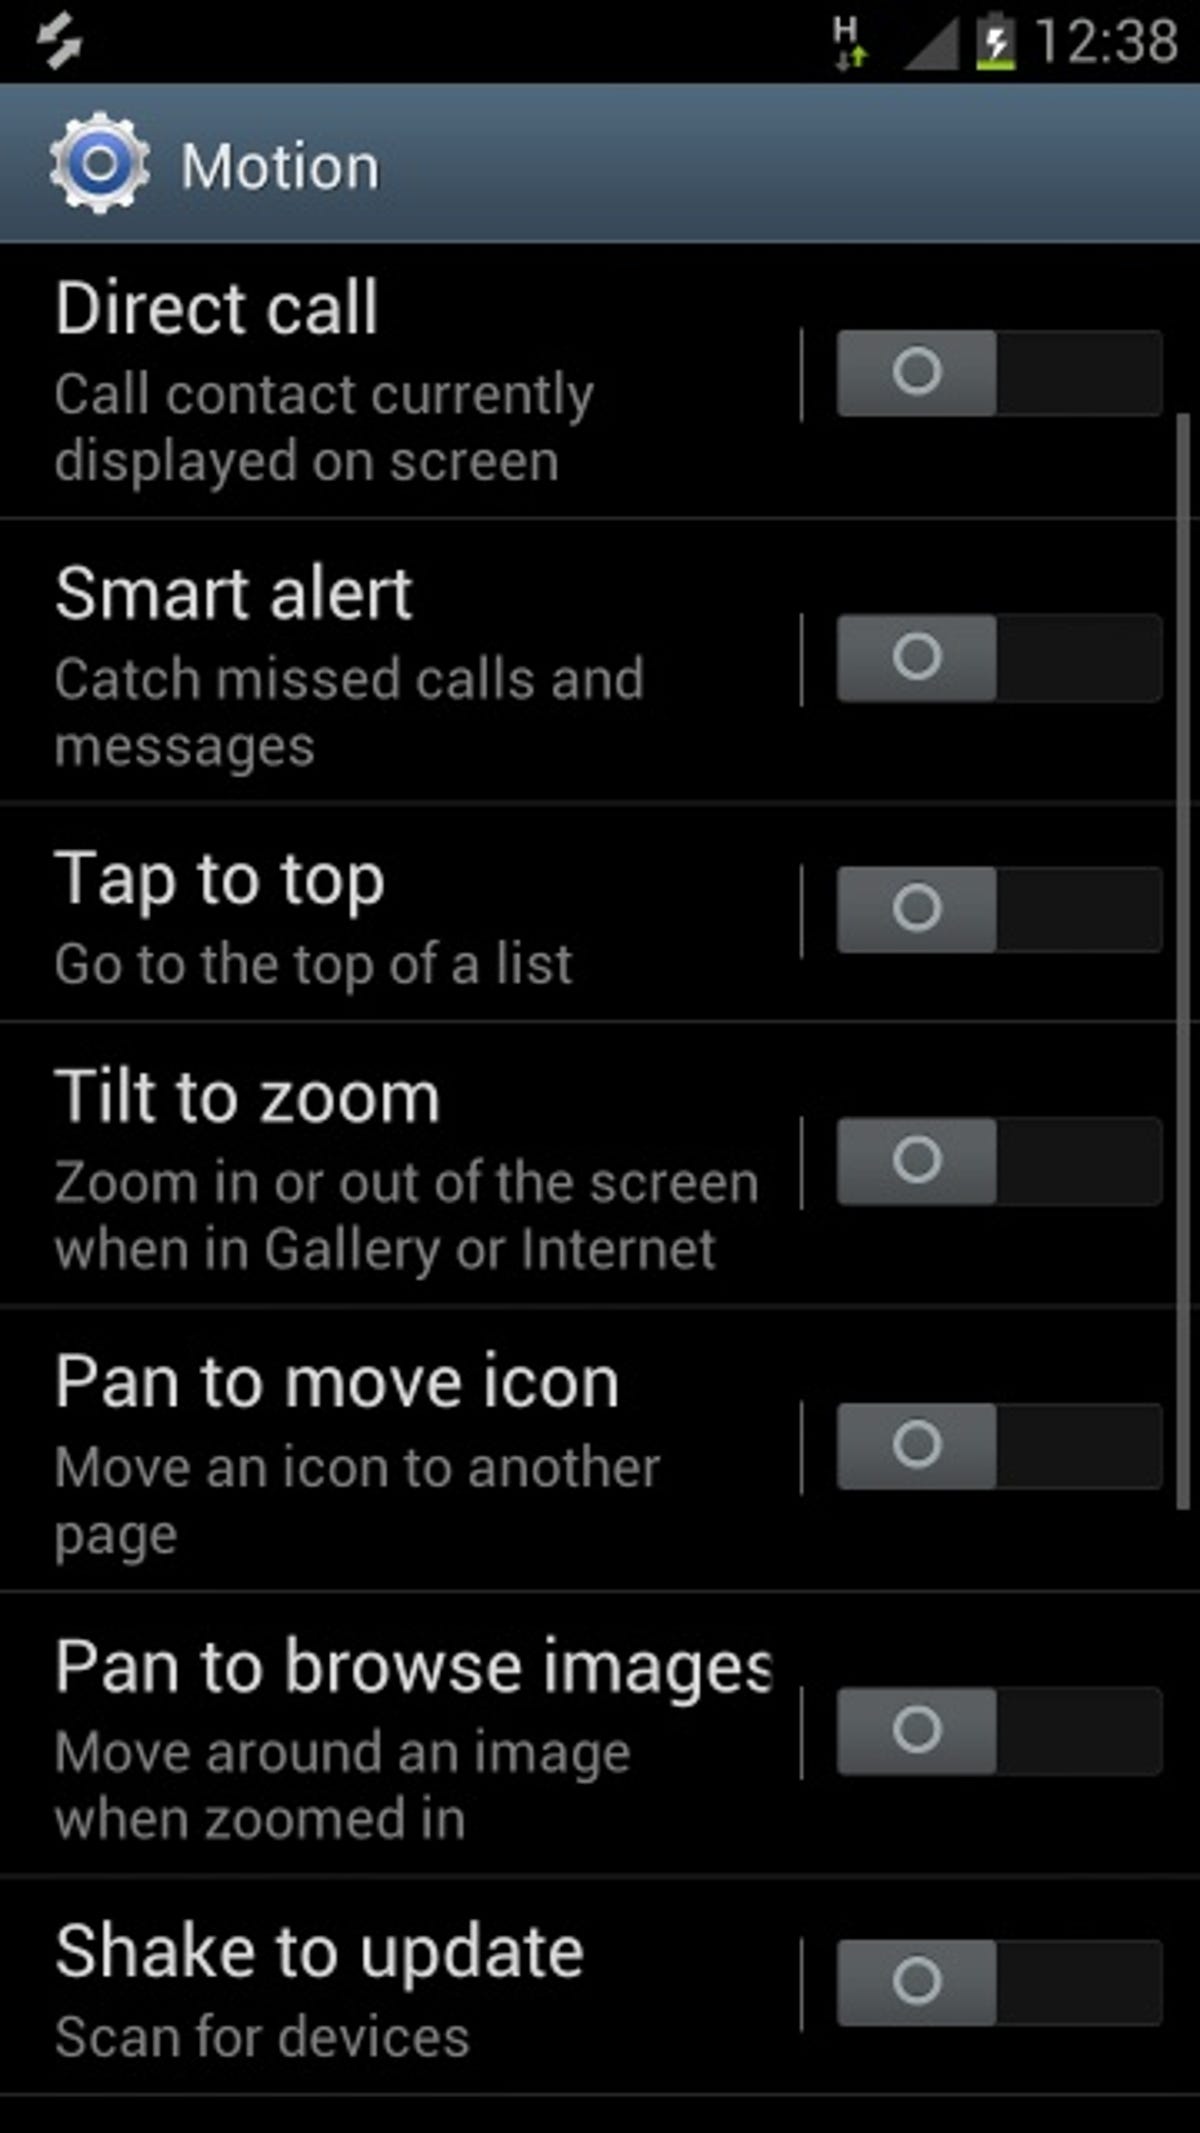 Samsung Galaxy S3 motion settings 1